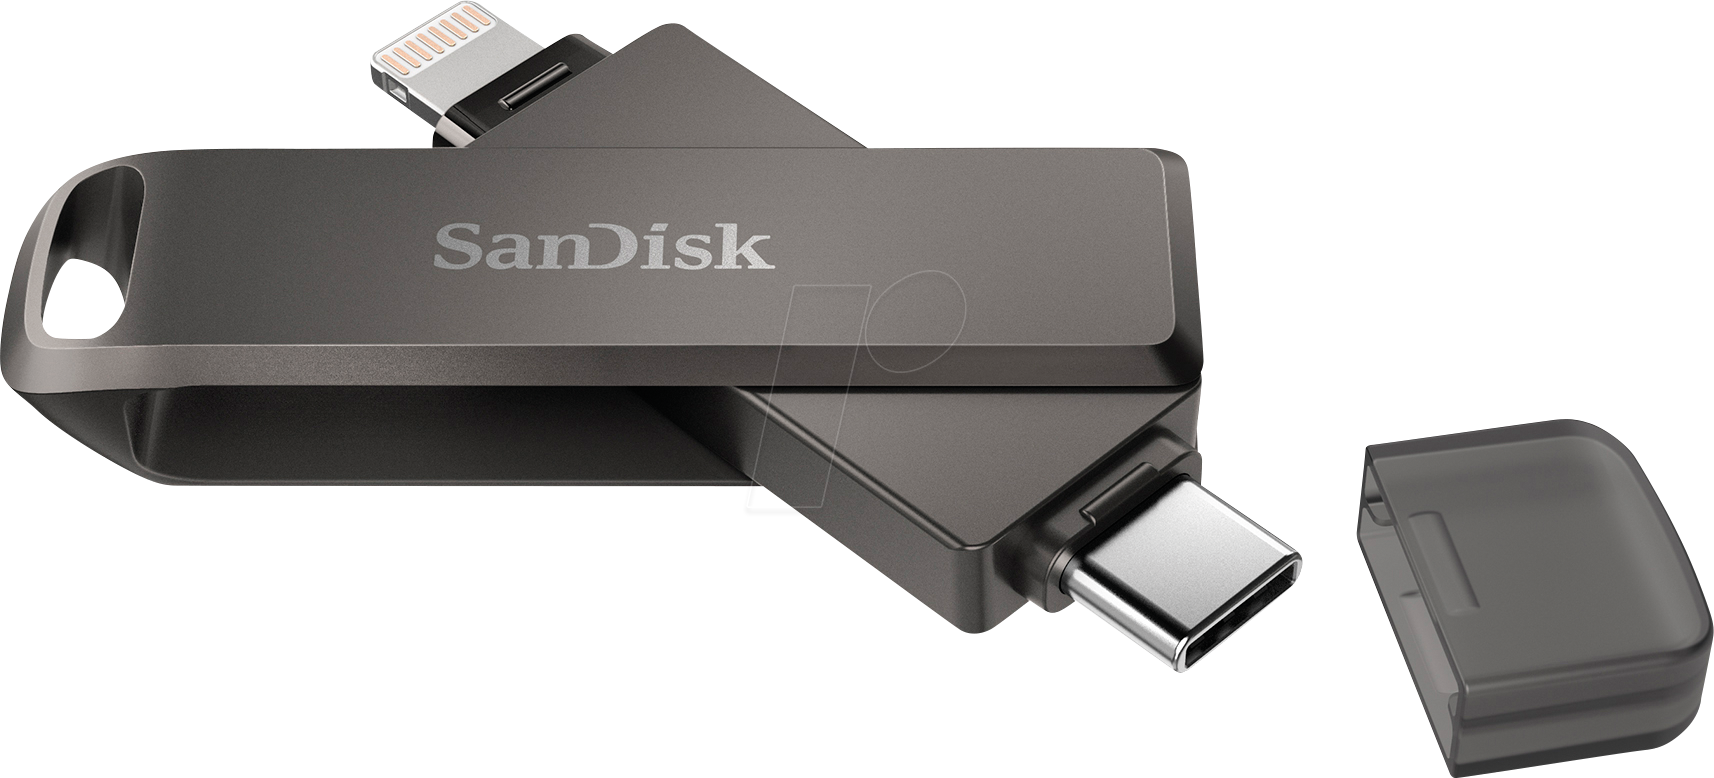 SDIX70N256GGN6NE - USB-Stick, USB 3.0, 256 GB, iXpand Luxe, Lightning, USB-C von Sandisk